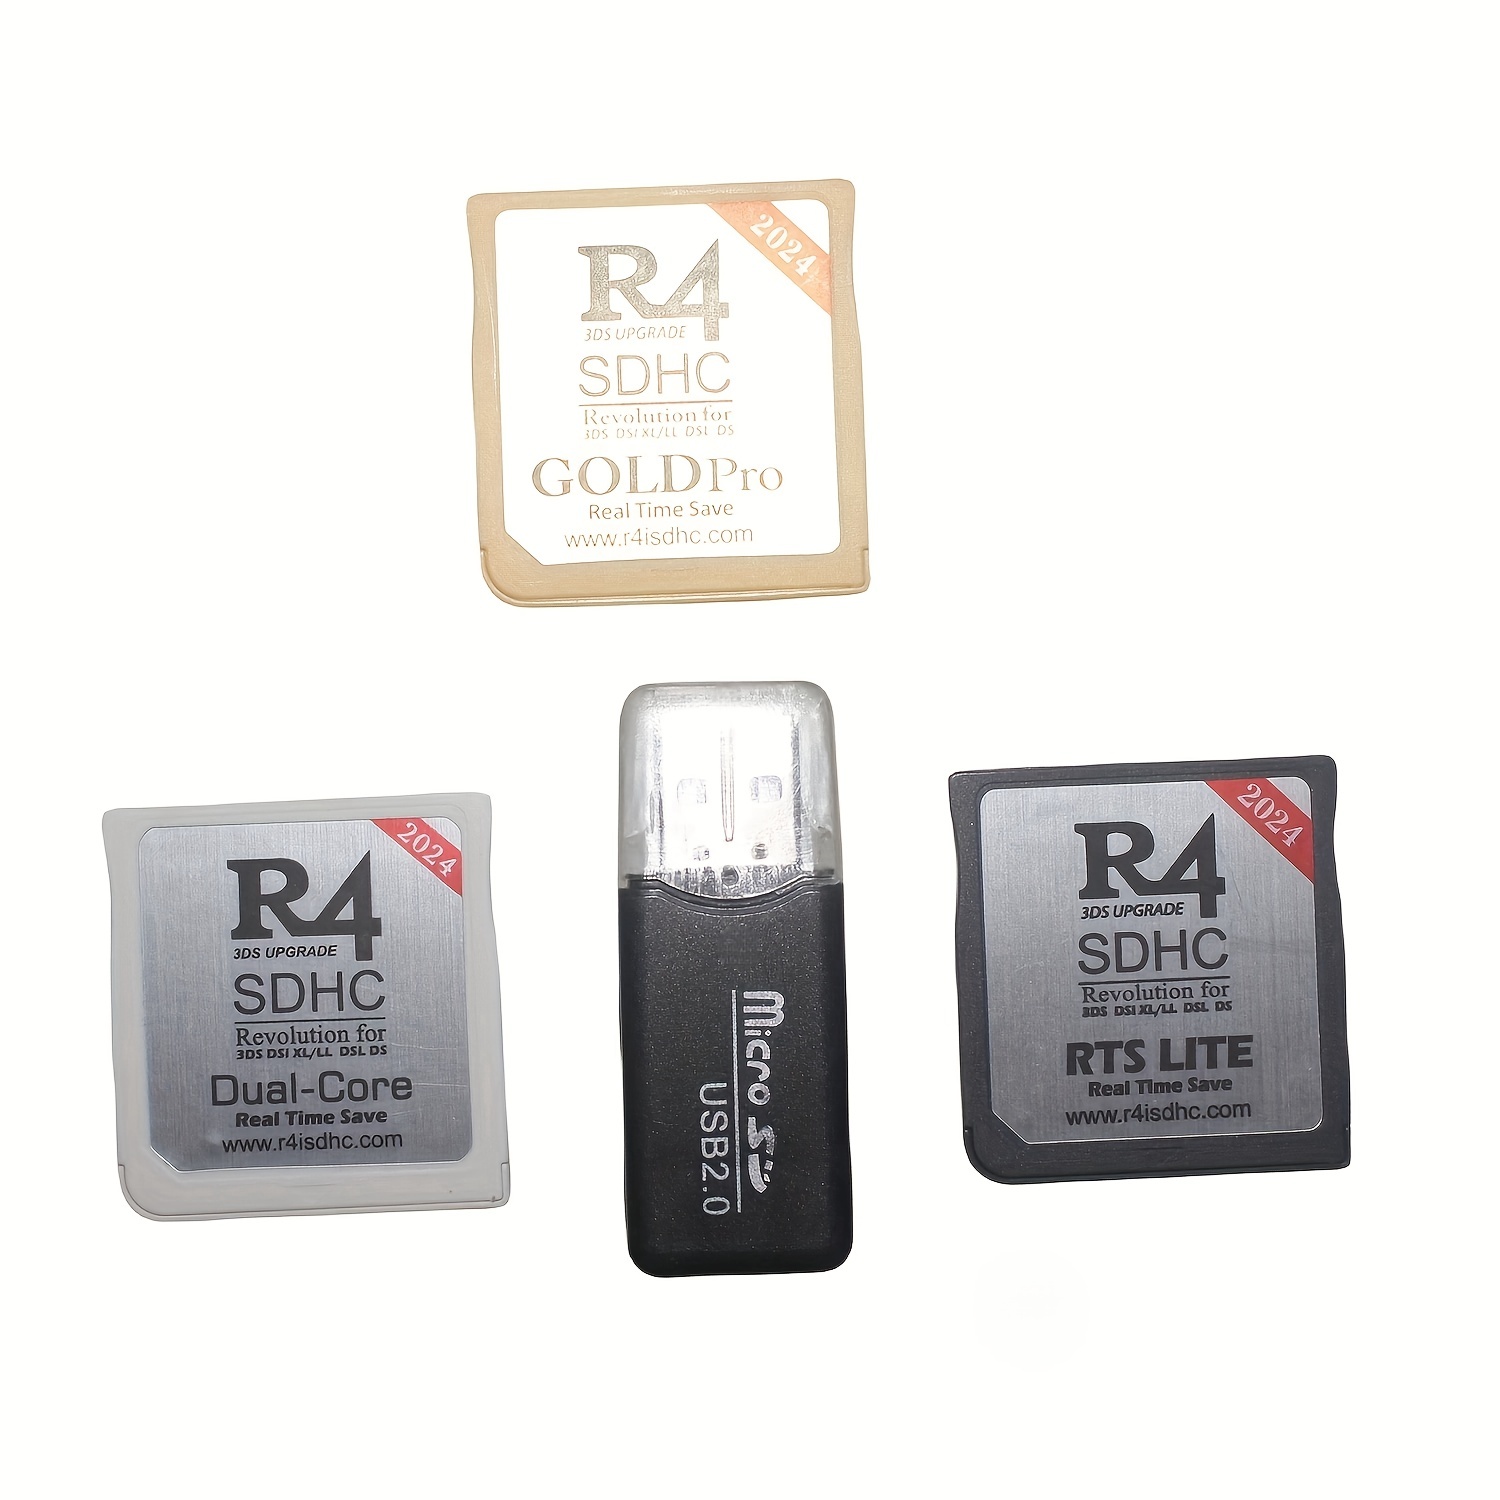 Accesorios R4 3ds Gold Tarjeta Memoria Para 3sddsixl